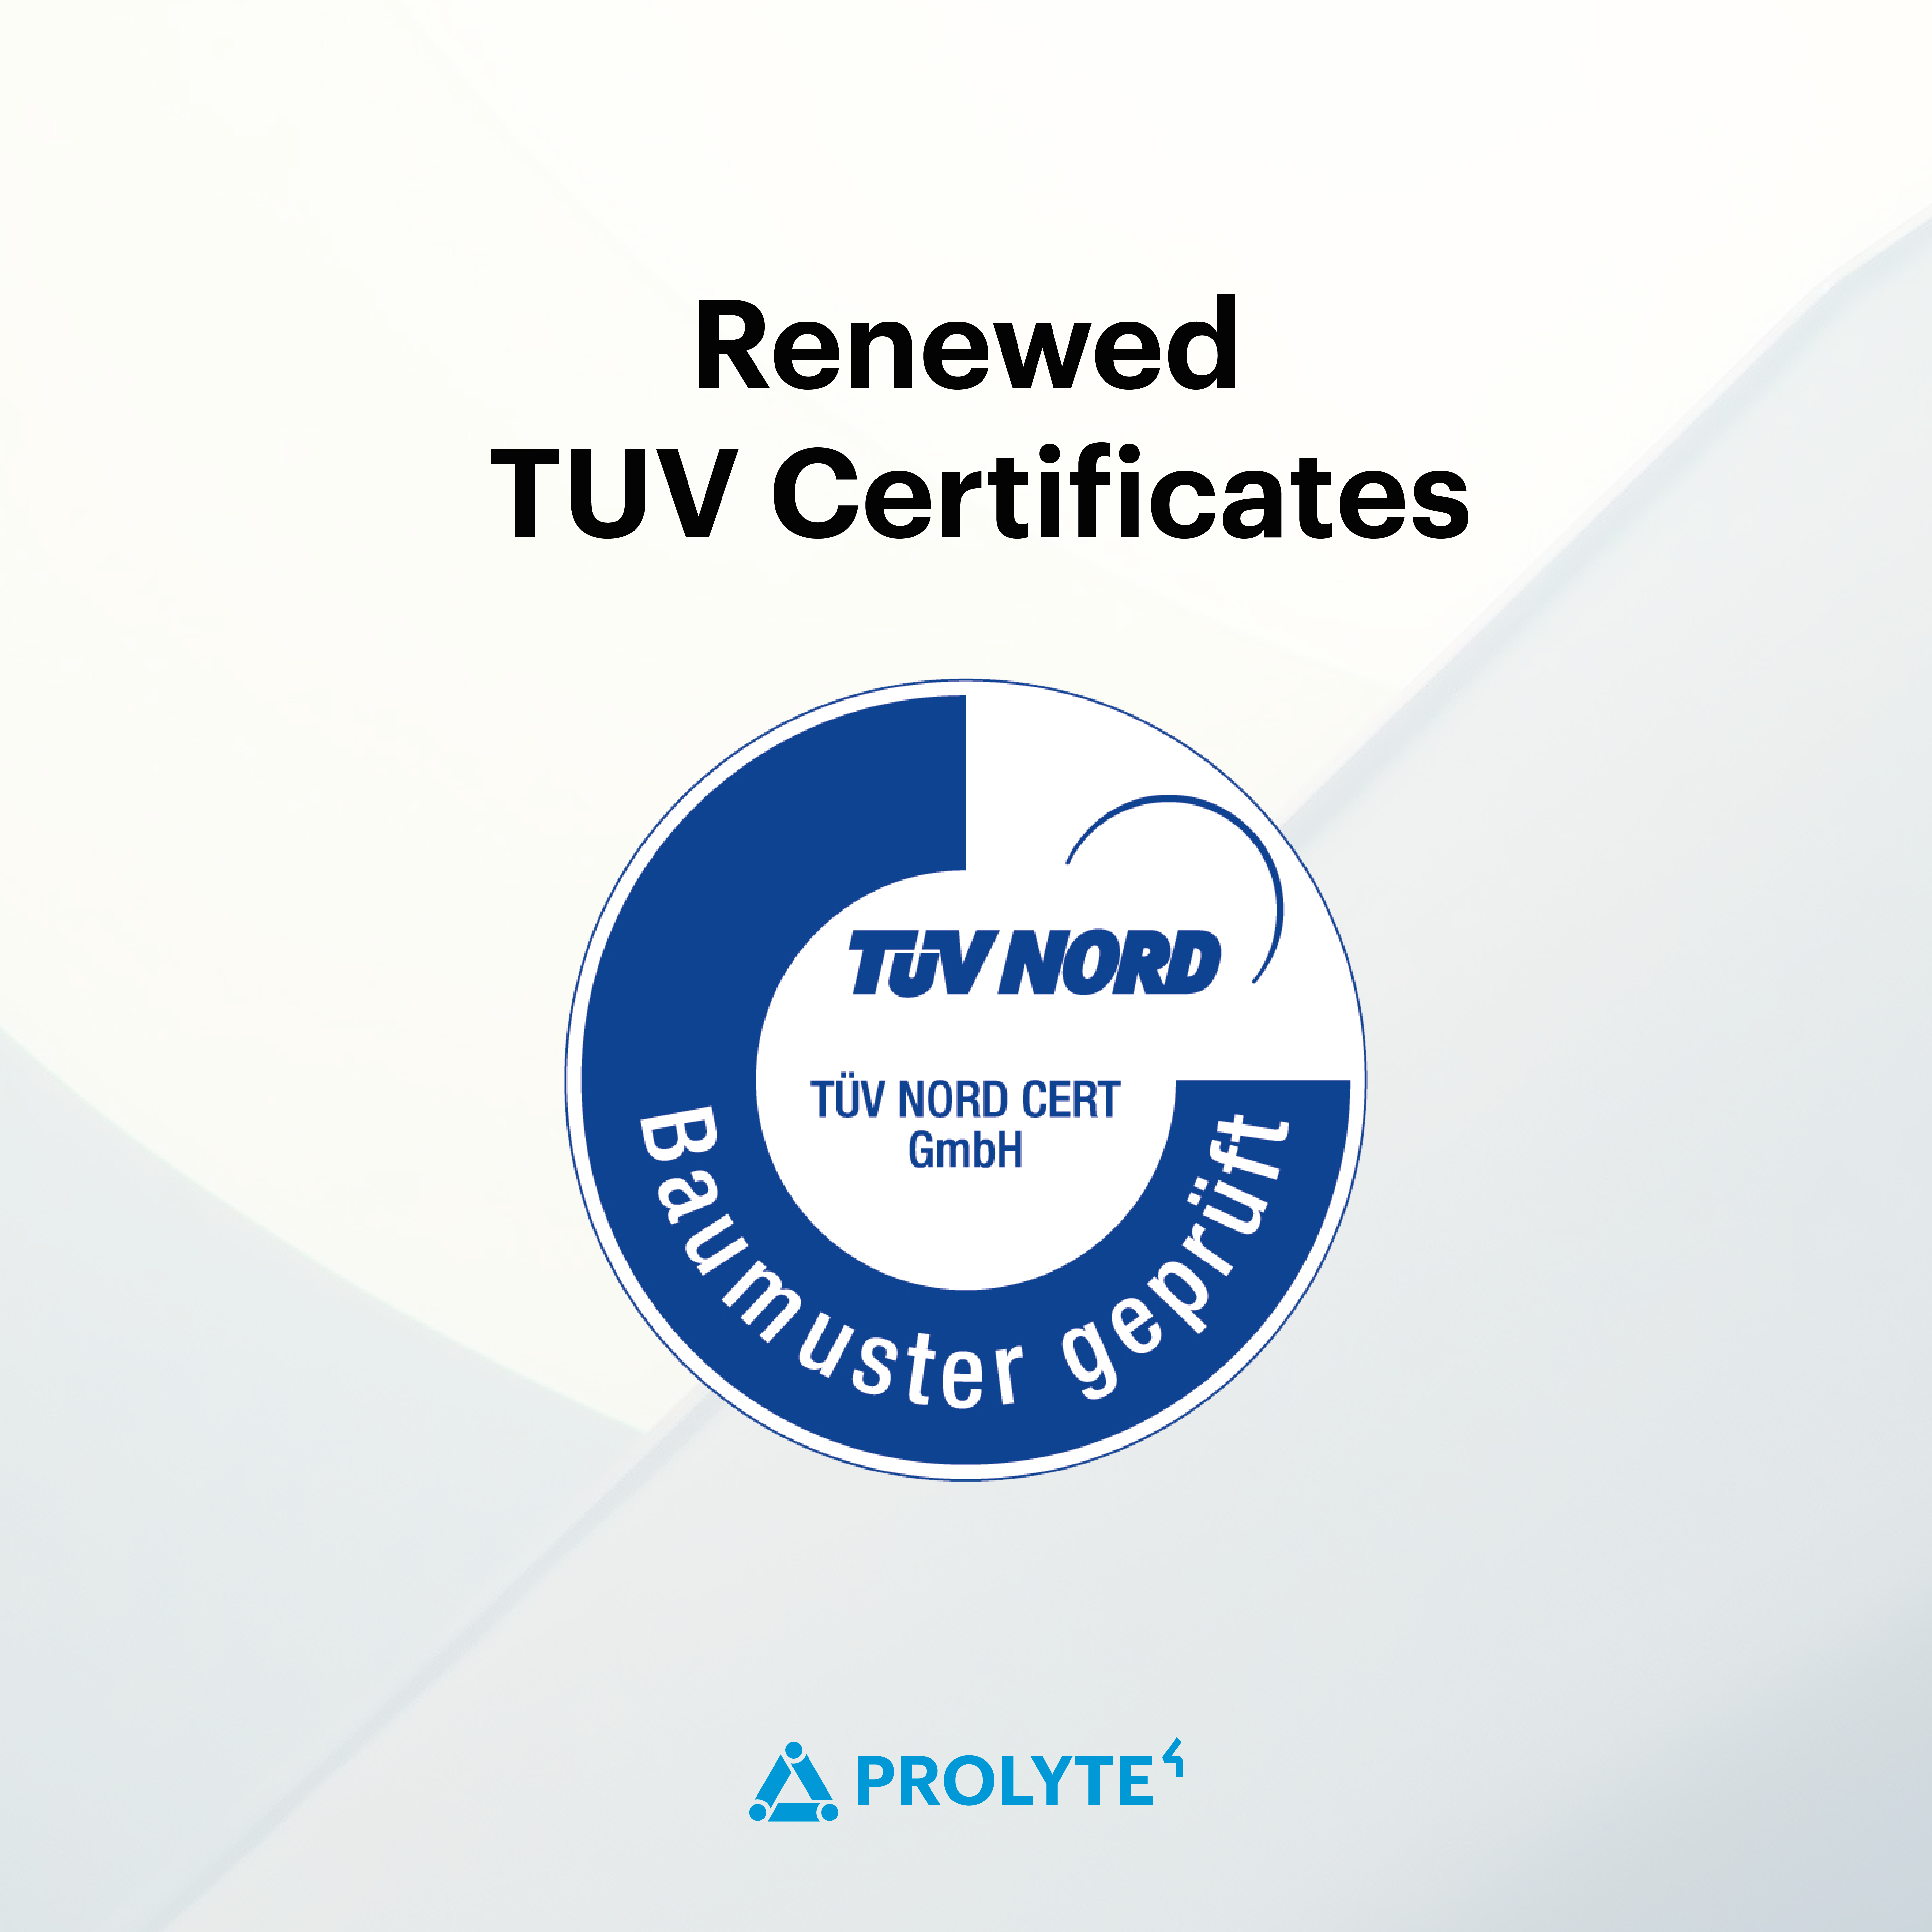 Prolyte Renews TUV Certificates 